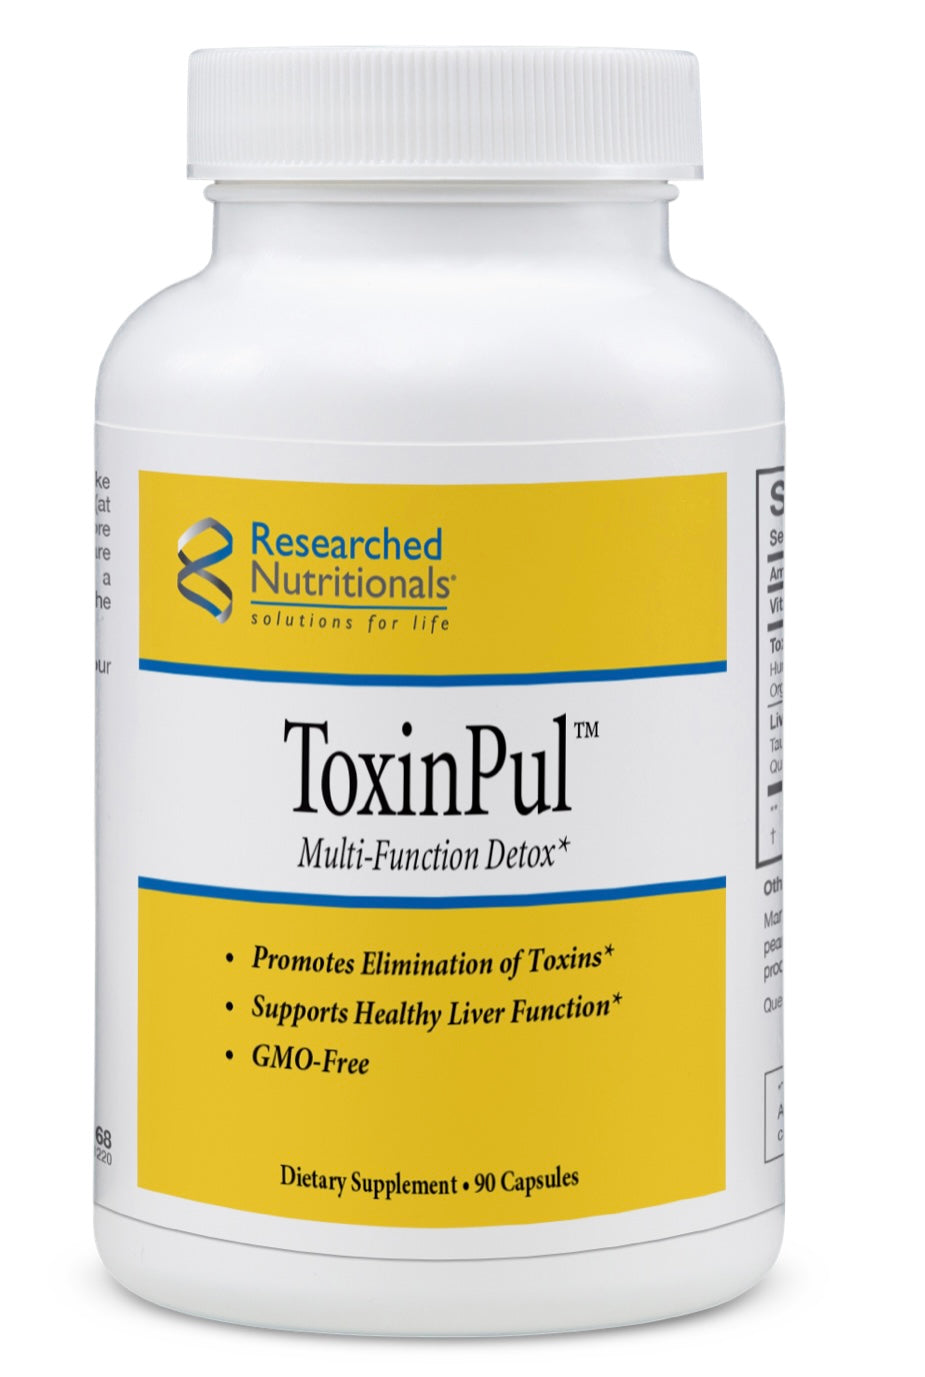 ToxinPul